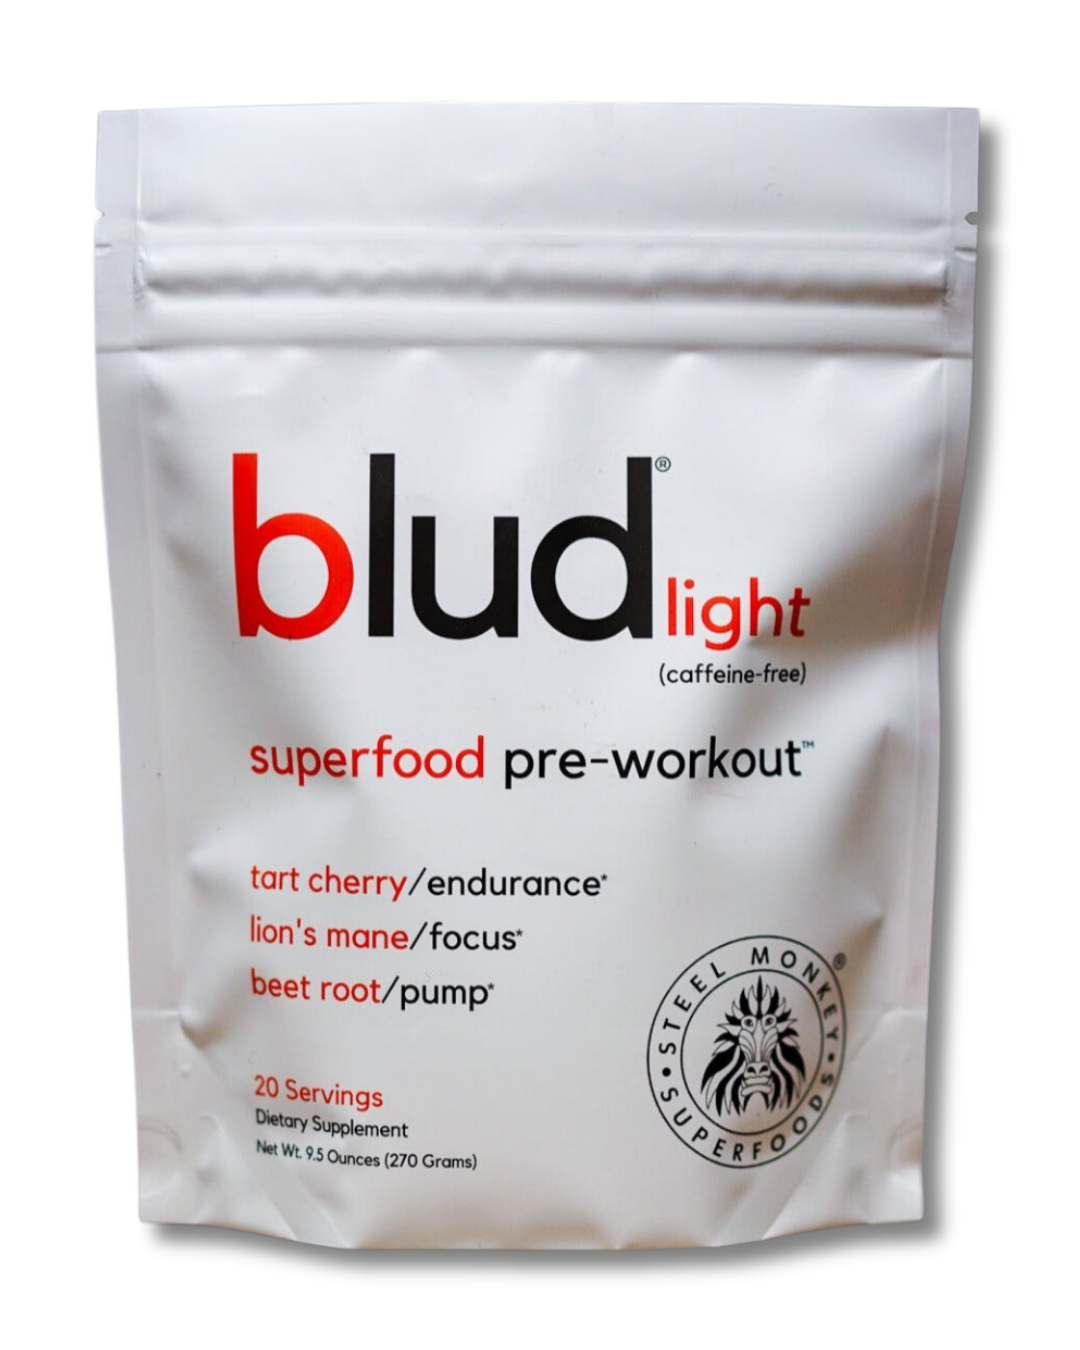 blud light caffeine free pre-workout